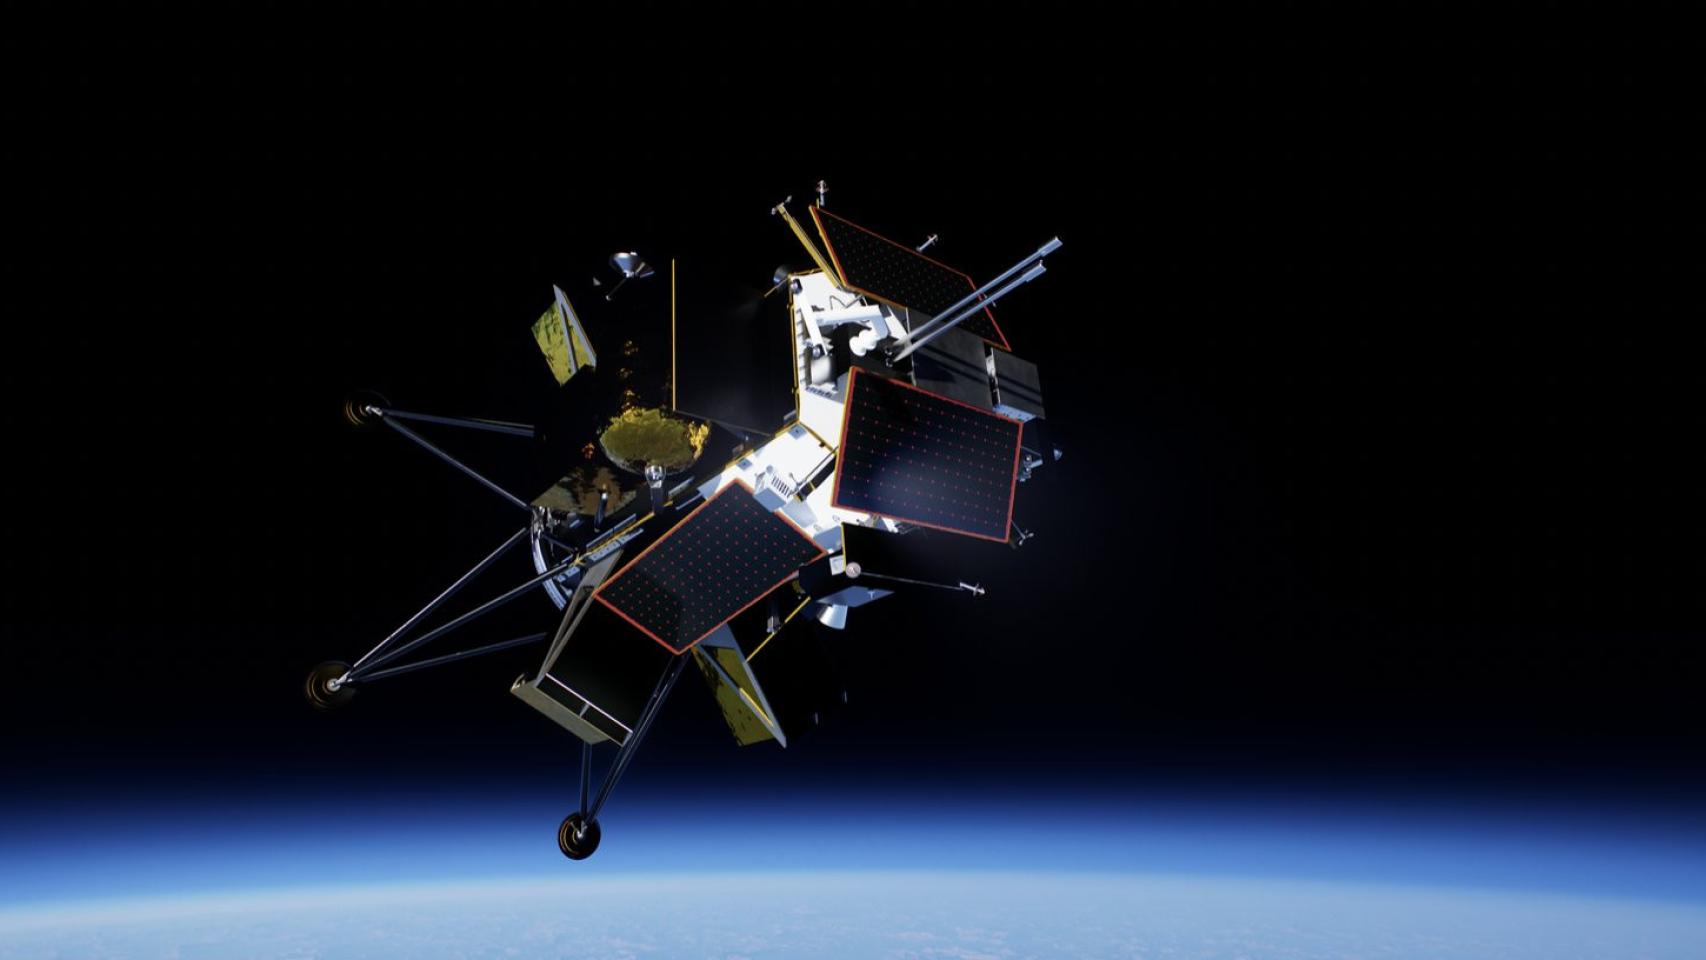 Nova-S flight as part of the IM-1 mission